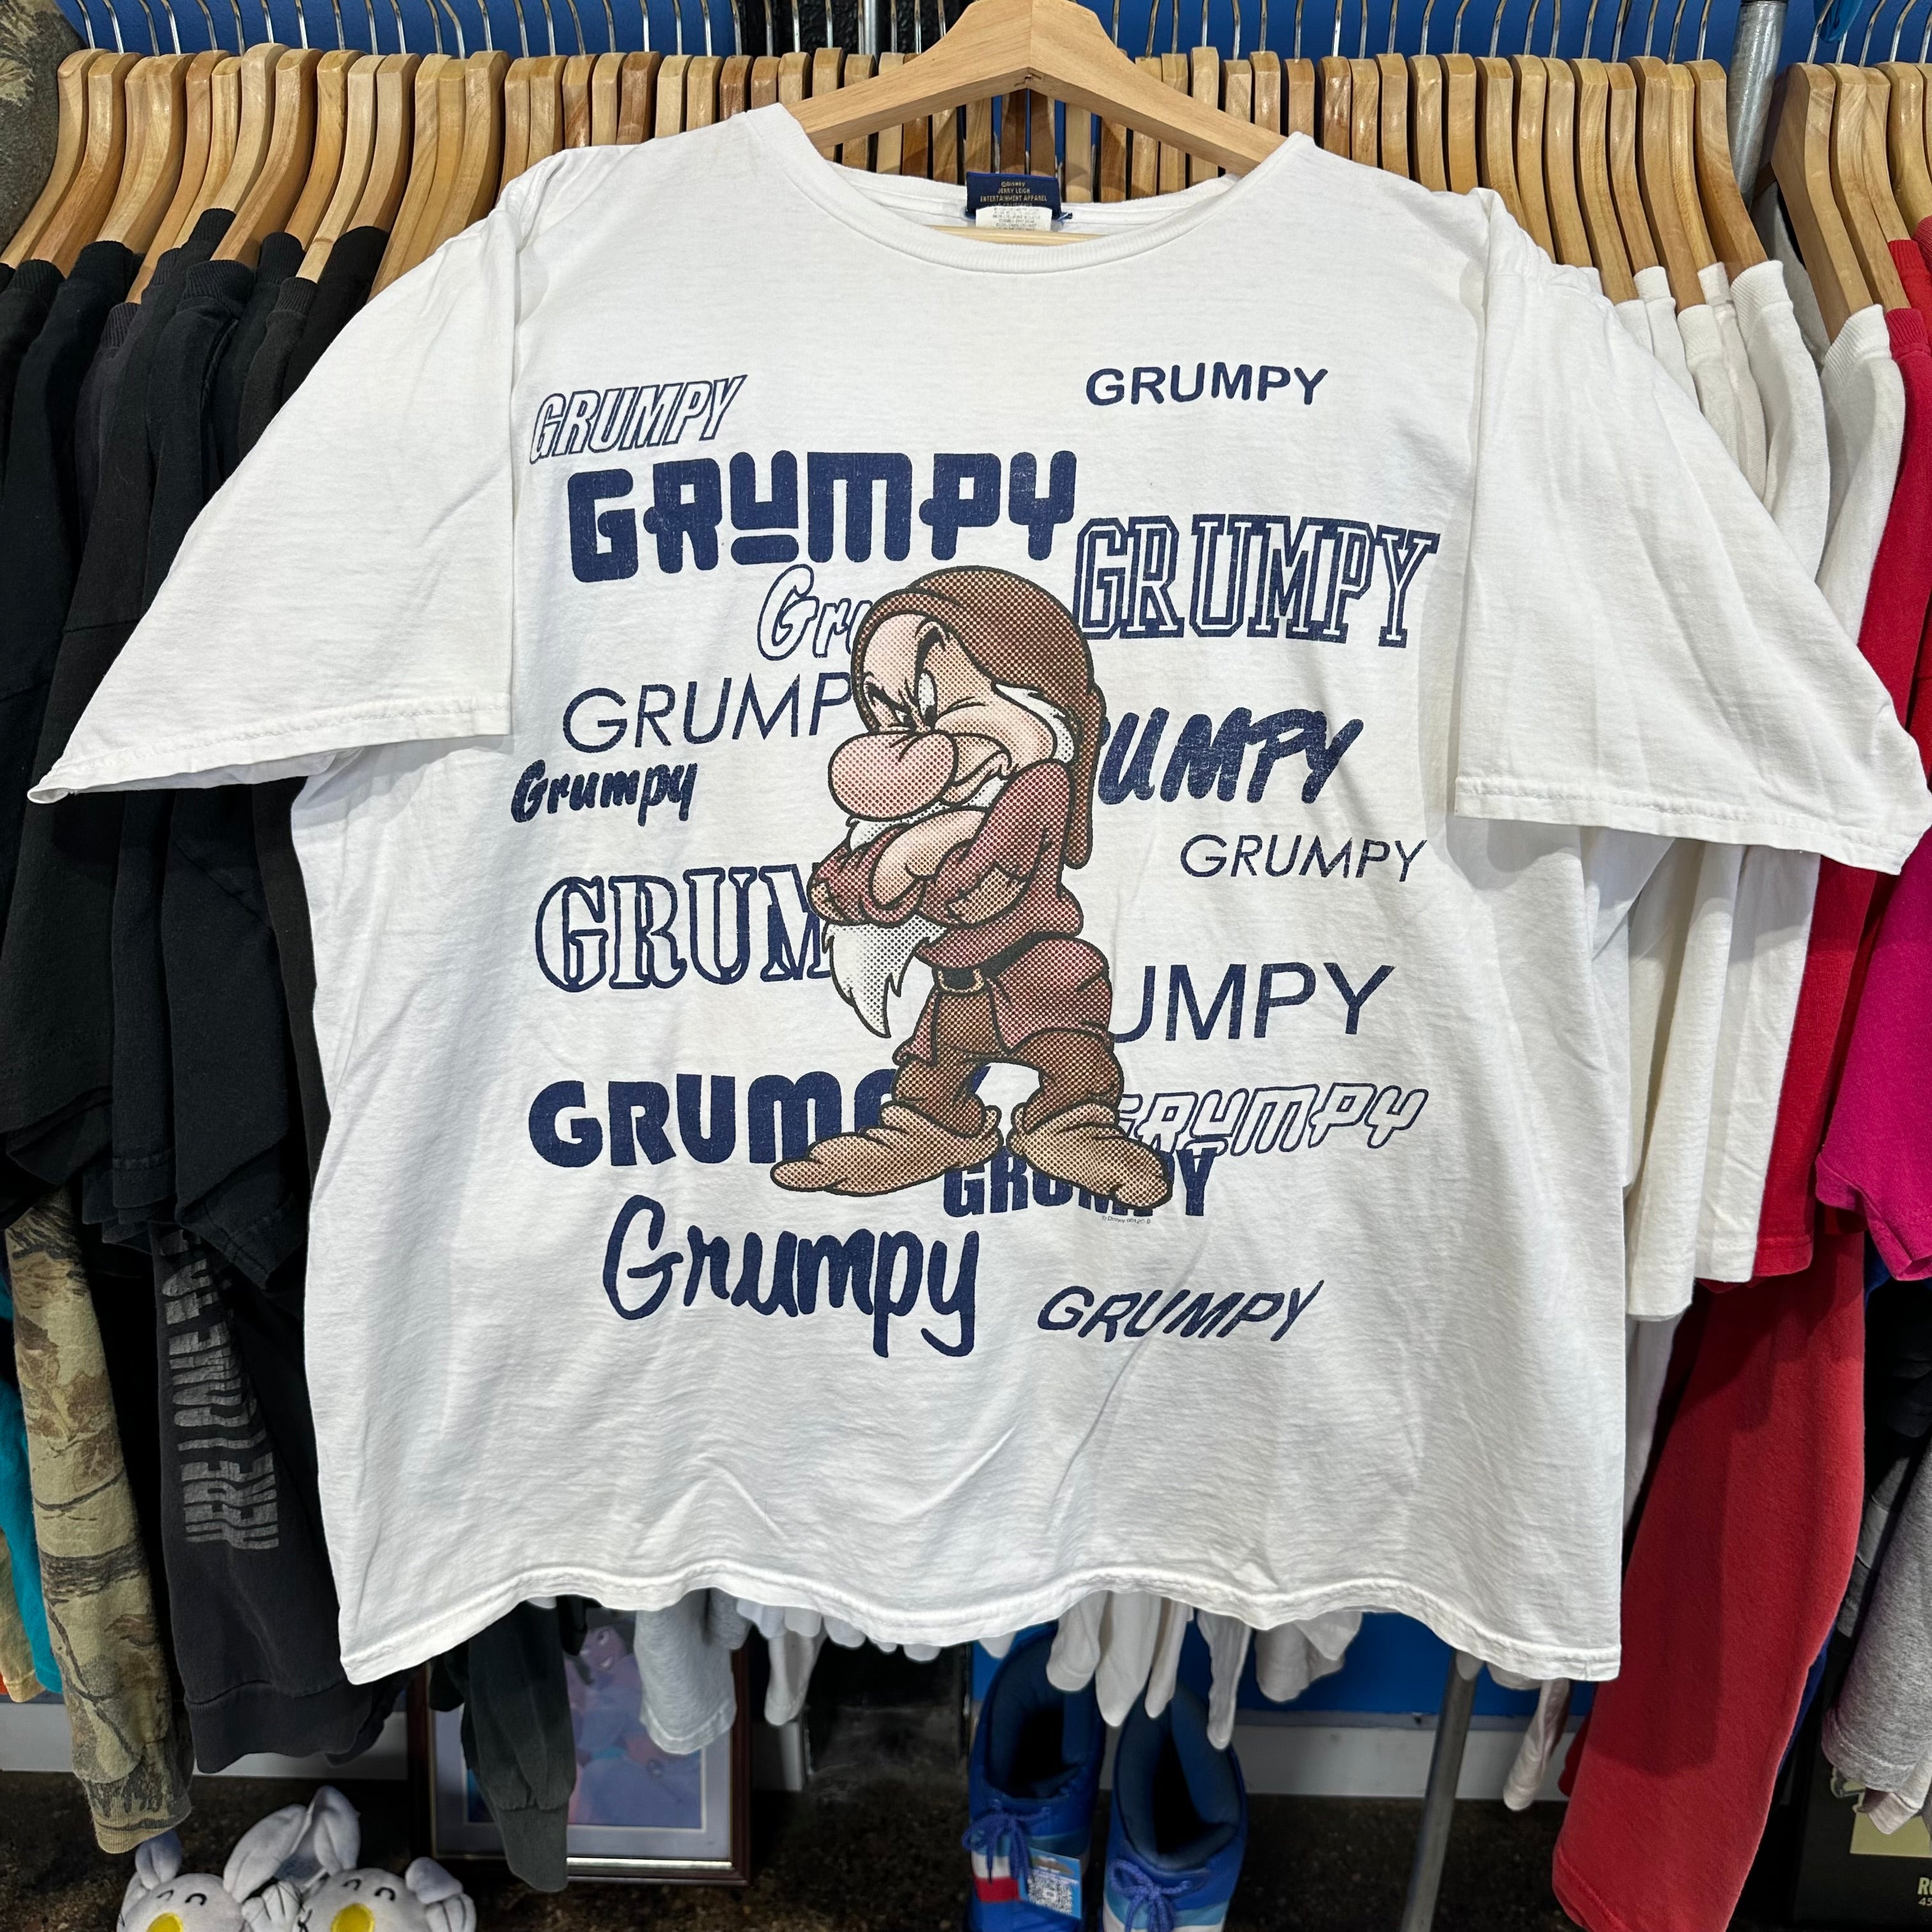 Grumpy T-Shirt